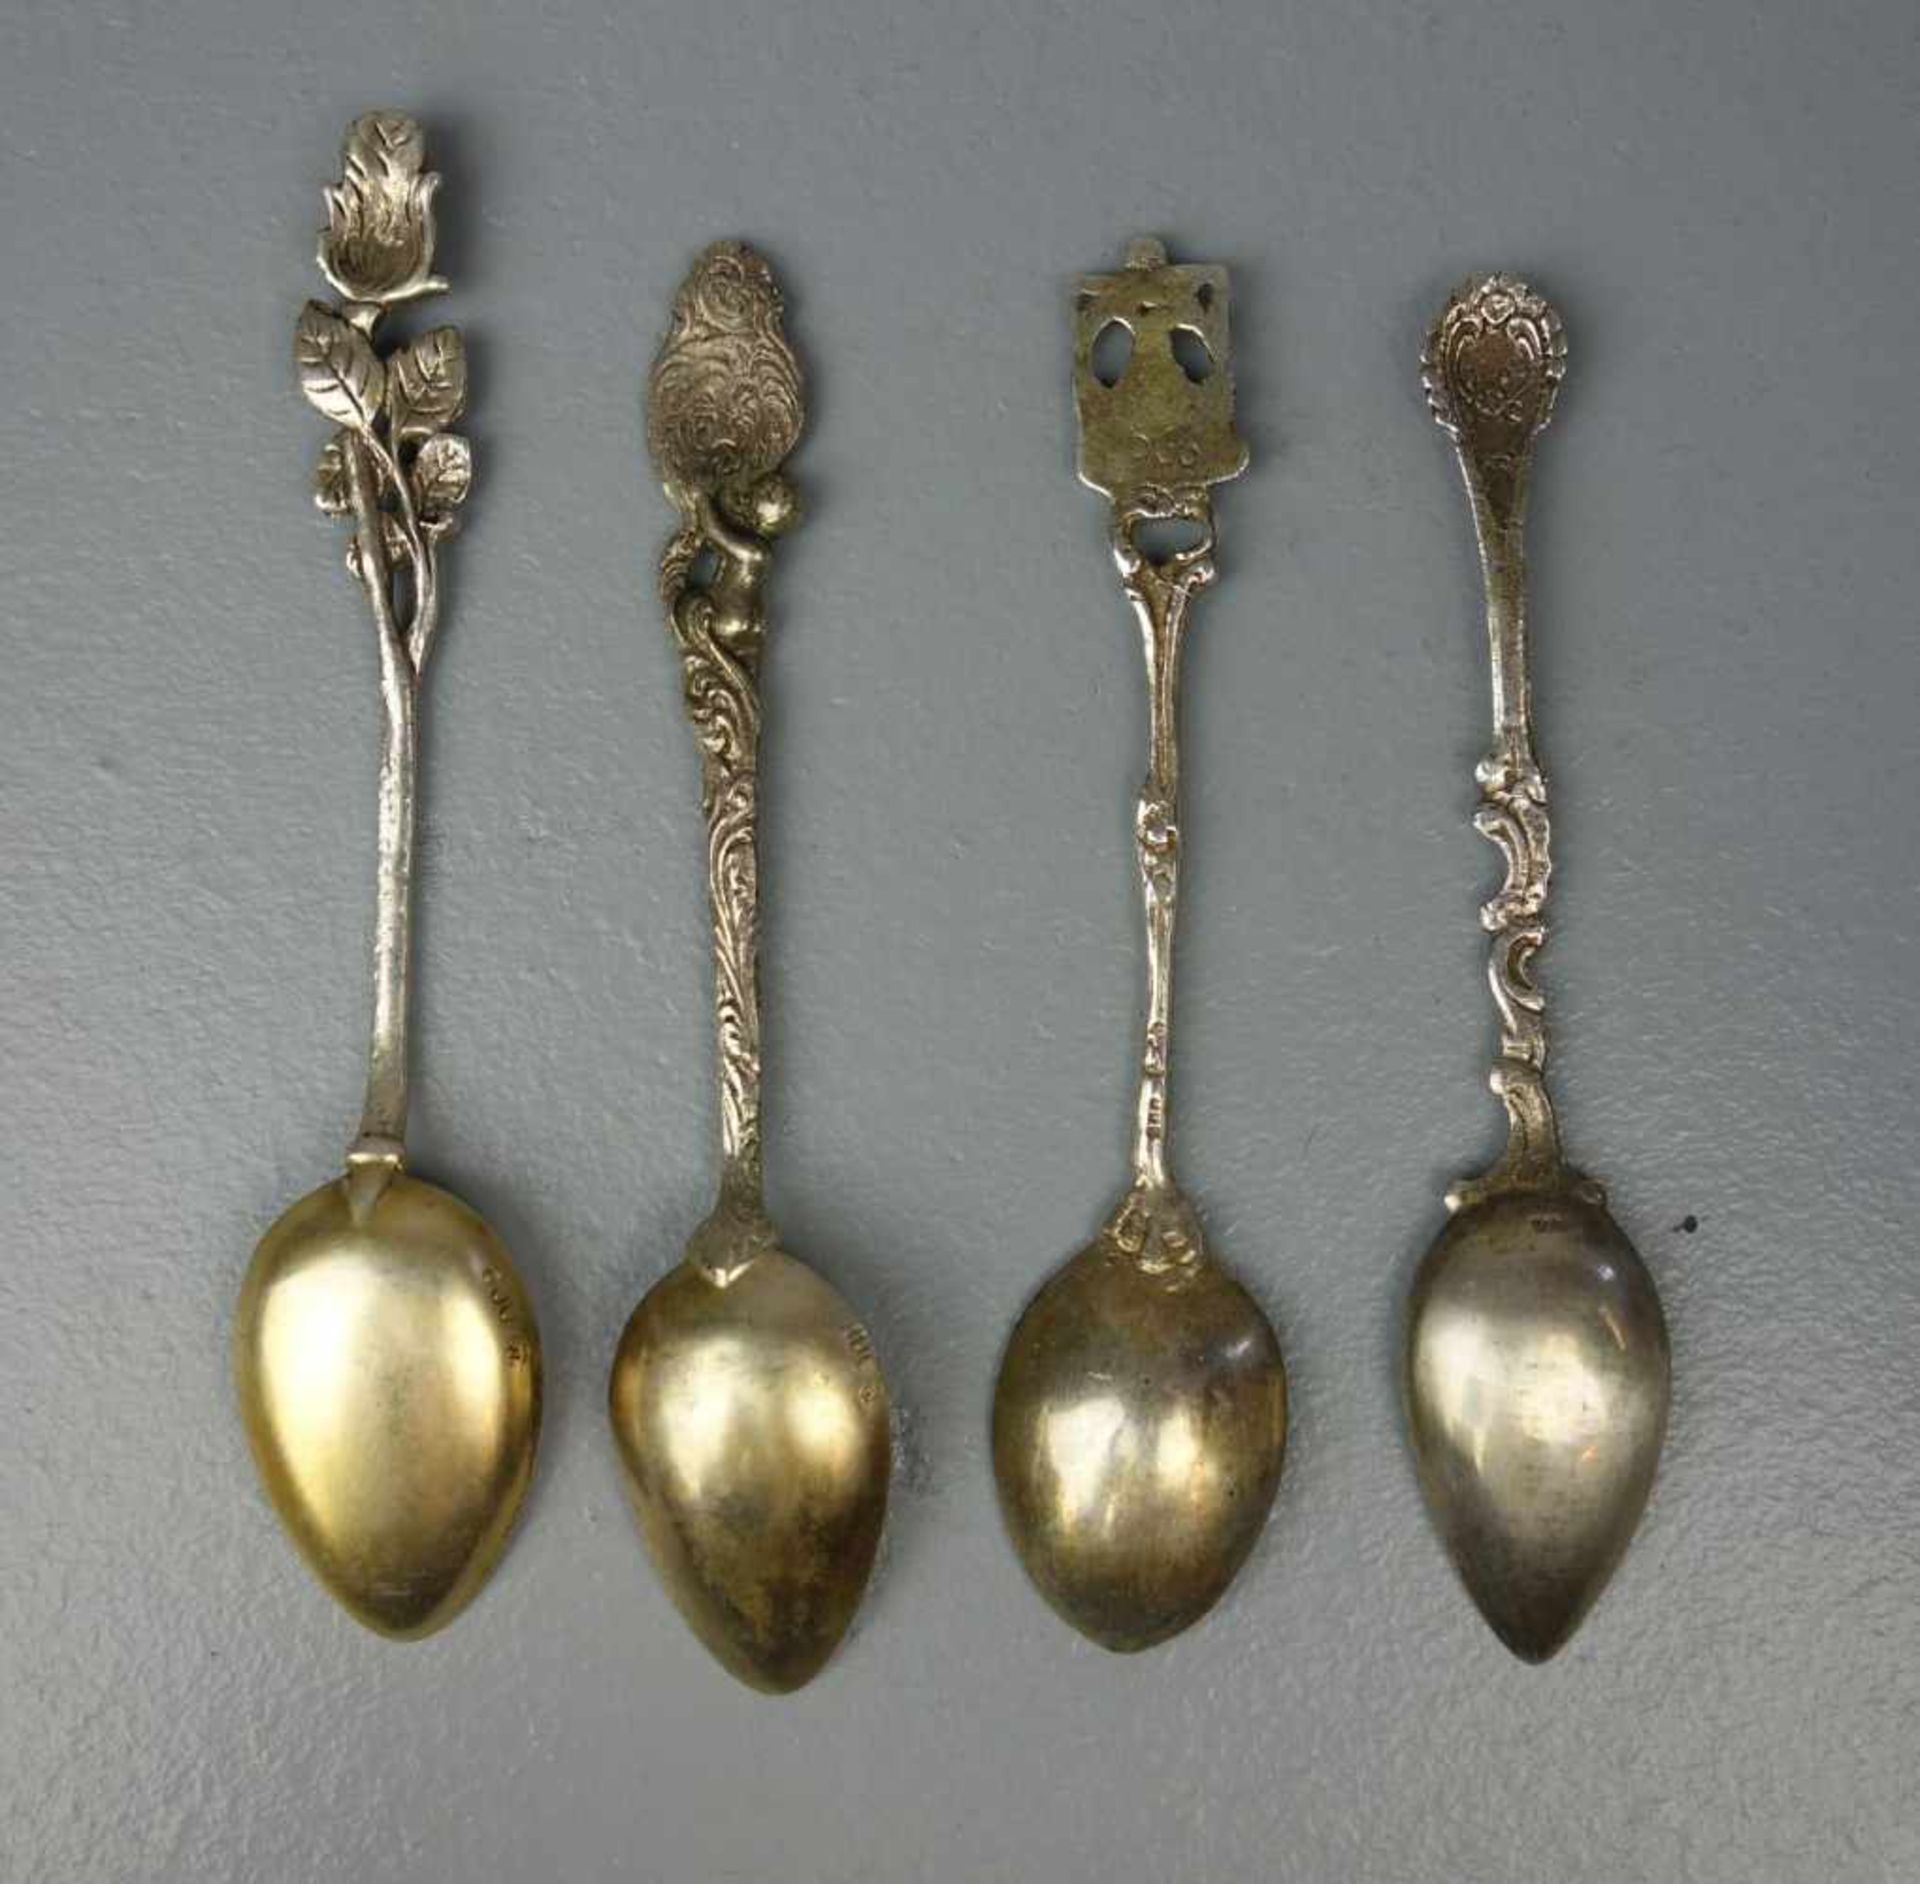 8 KLEINE LÖFFEL / MOKKALÖFFEL / mocha spoons, 20. Jh., Silber, Laffen partiell mit Restvergoldung. - Image 5 of 5